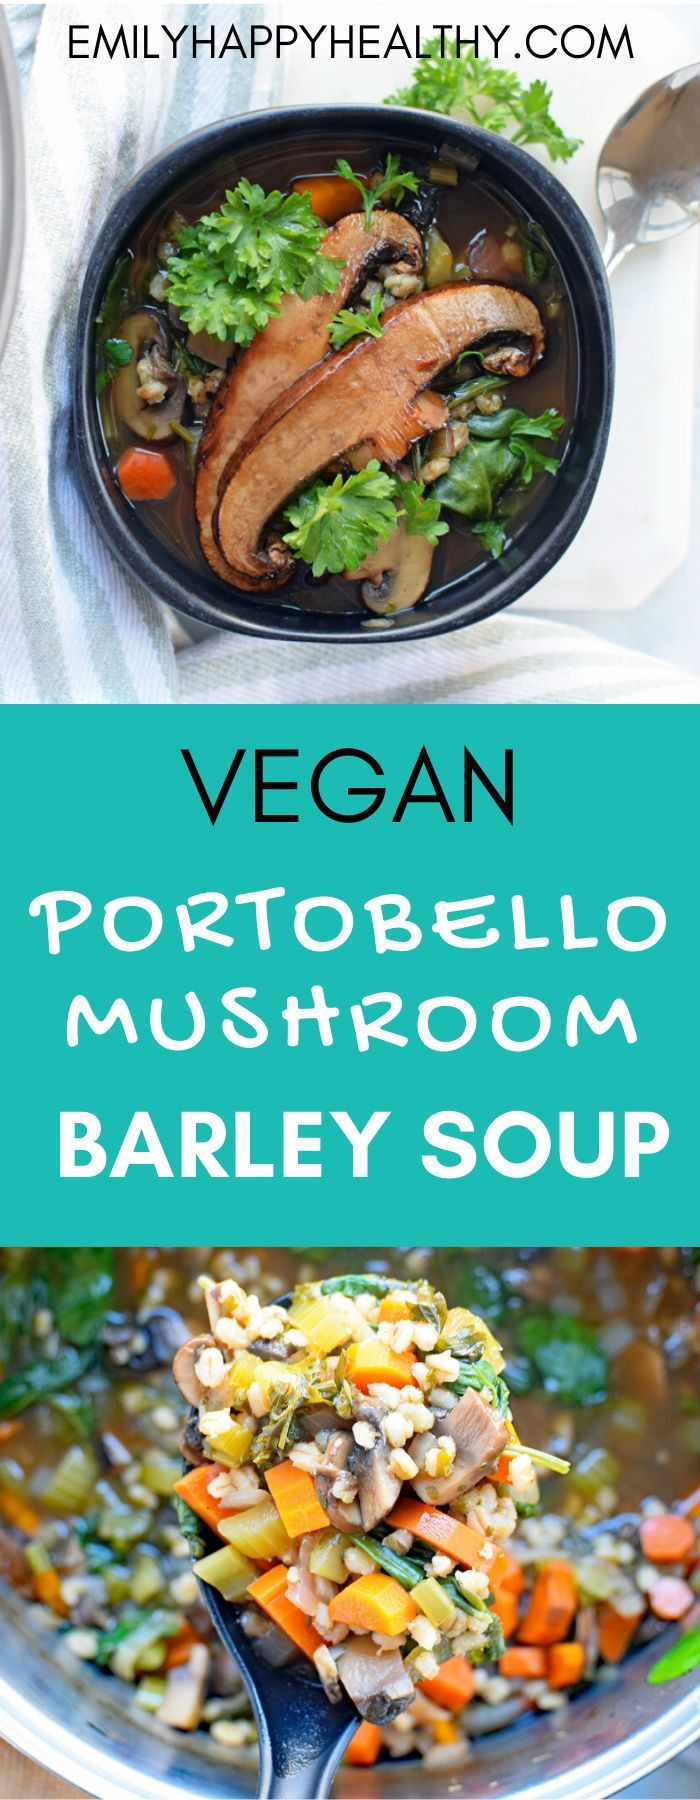 Whole Foods Mushroom Barley Soup
 Portobello Mushroom Barley Soup Recipe in 2020